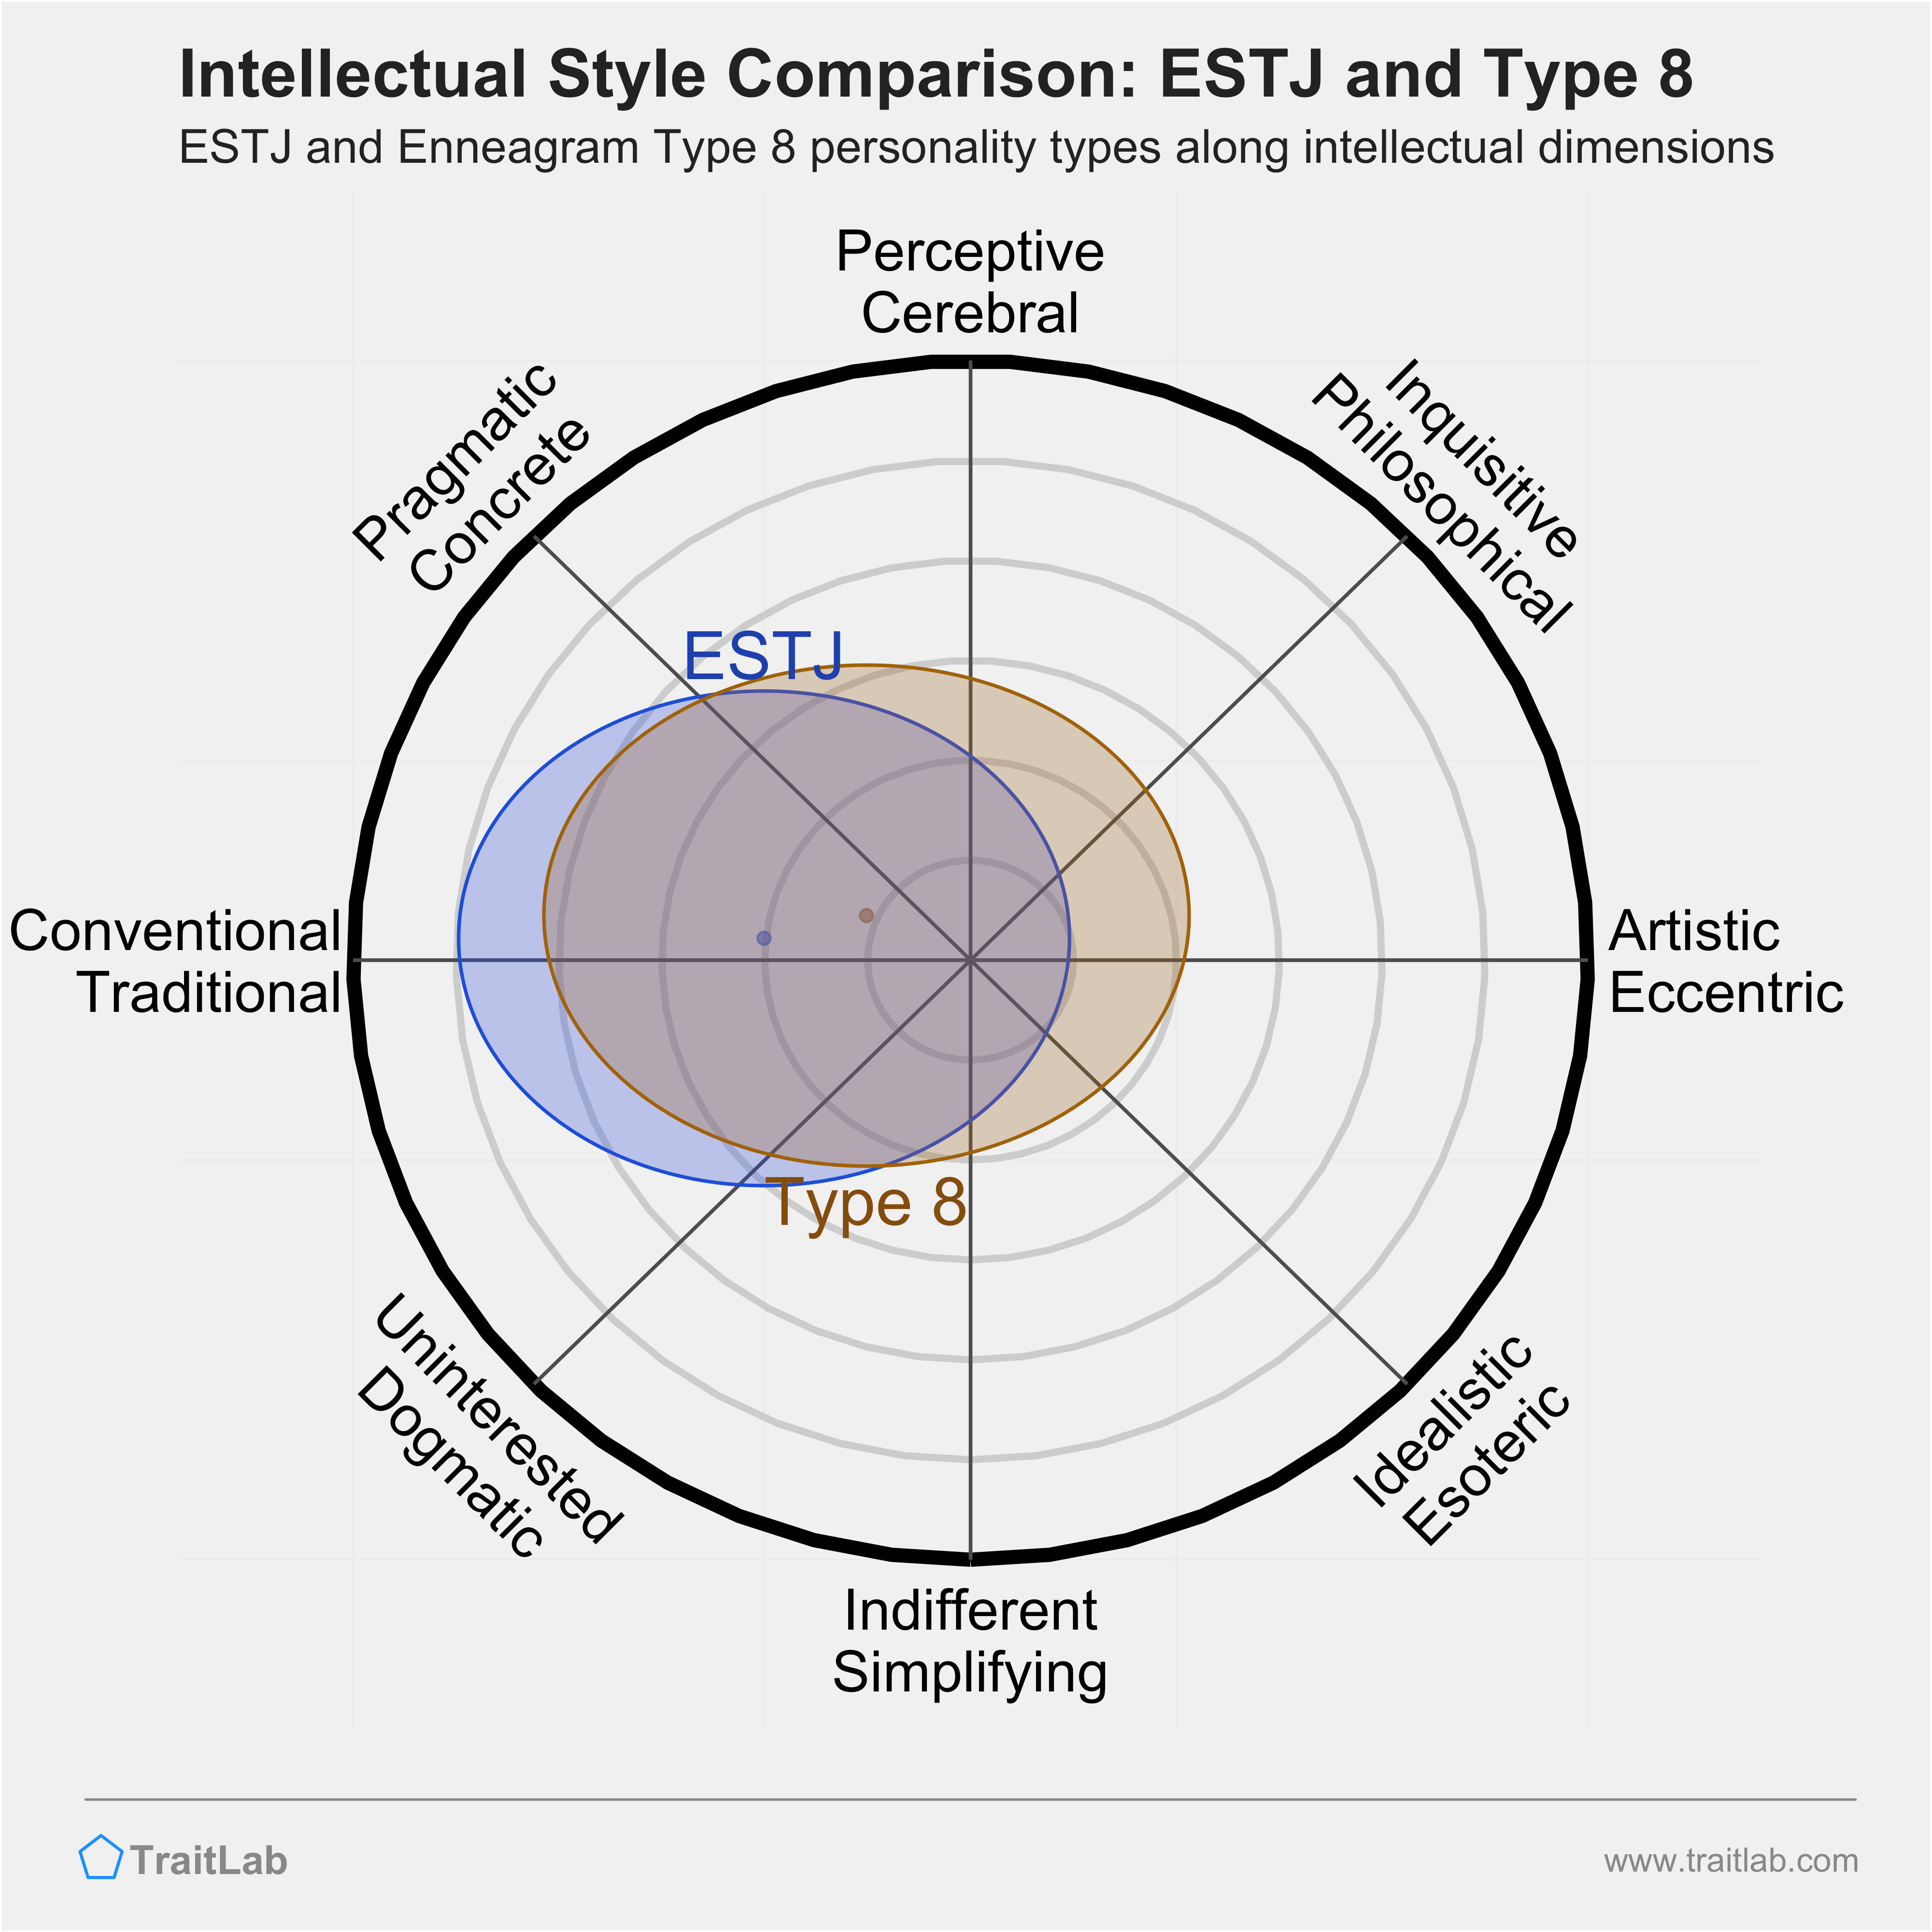 ESTJ and Type 8 comparison across intellectual dimensions